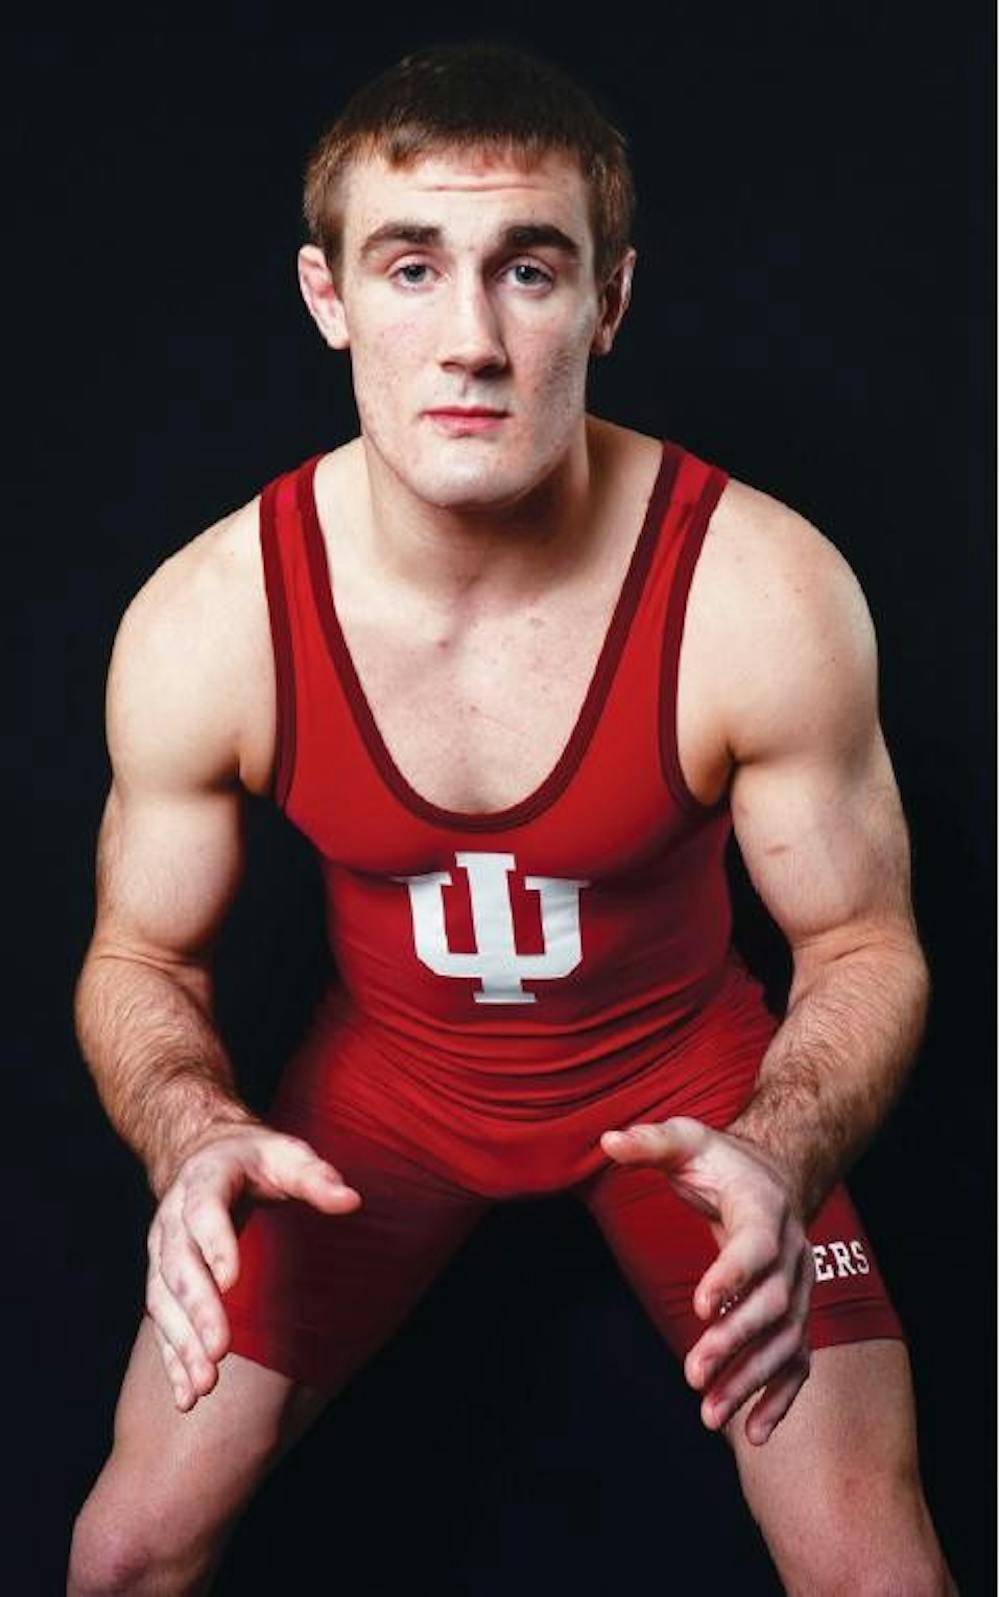 Senior IU wrestler Matt Powless